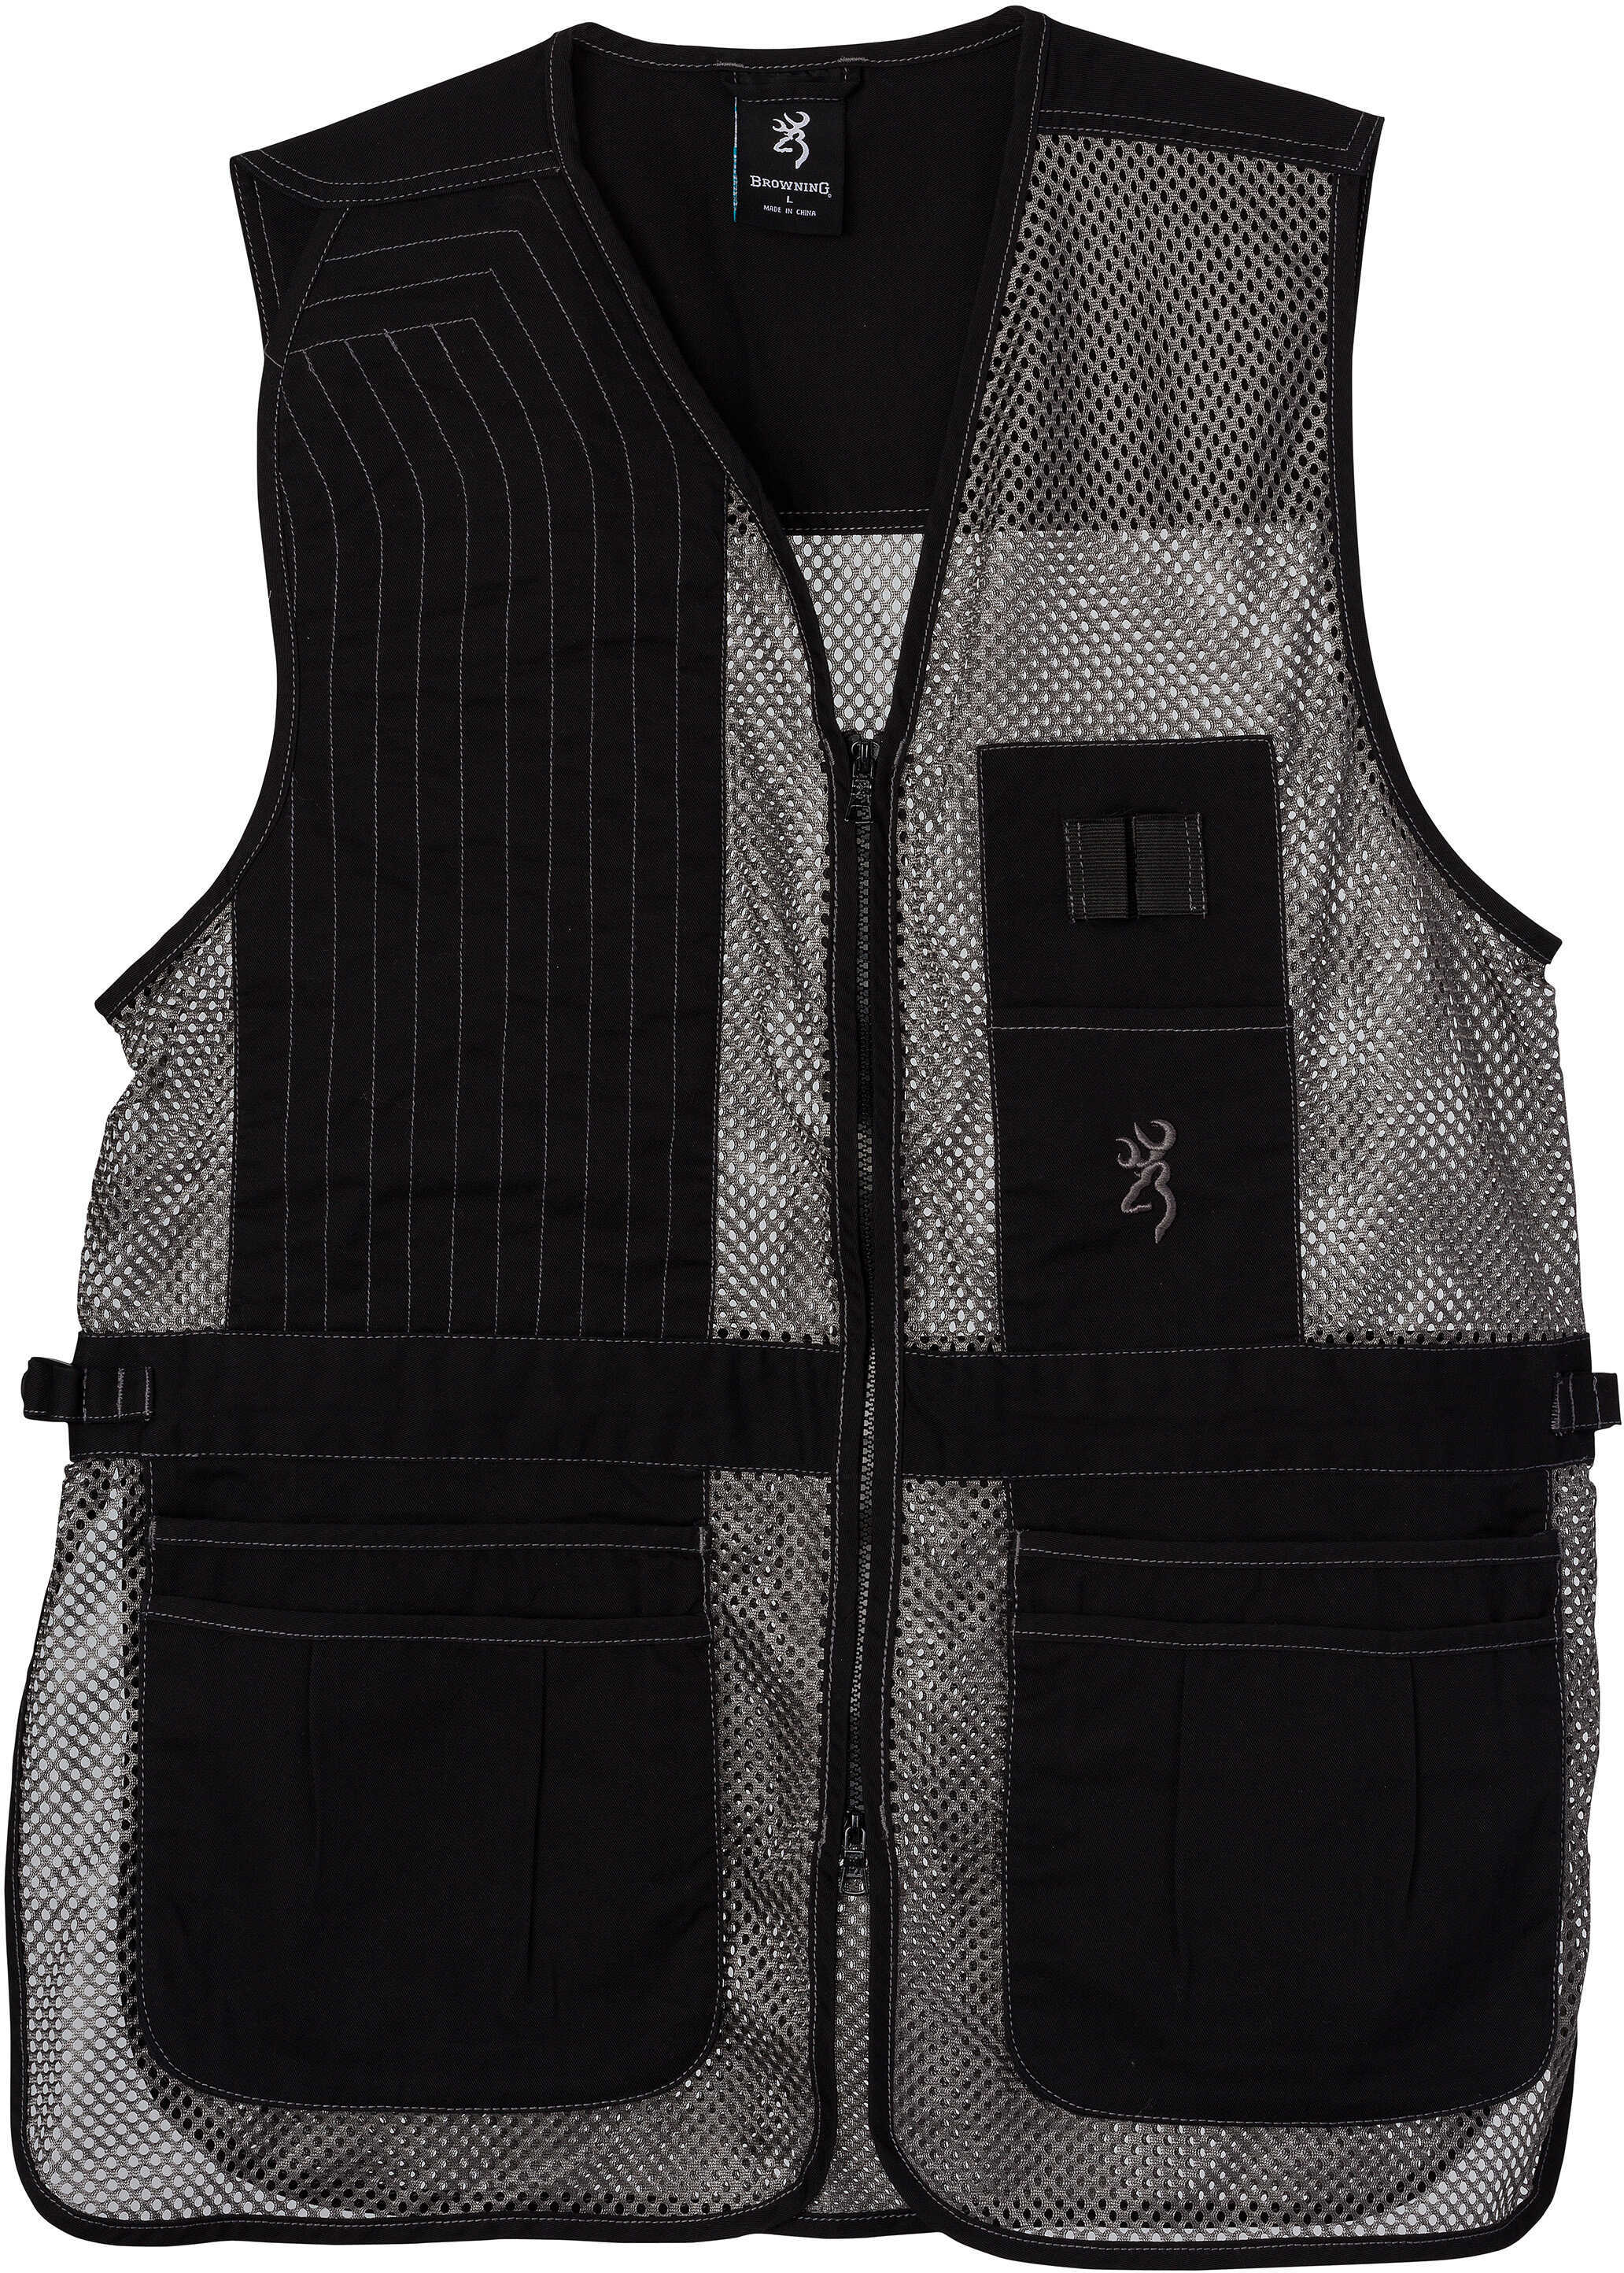 Browning Trapper Creek Mesh Shooting Vest Black/Gray, Medium, Right Hand